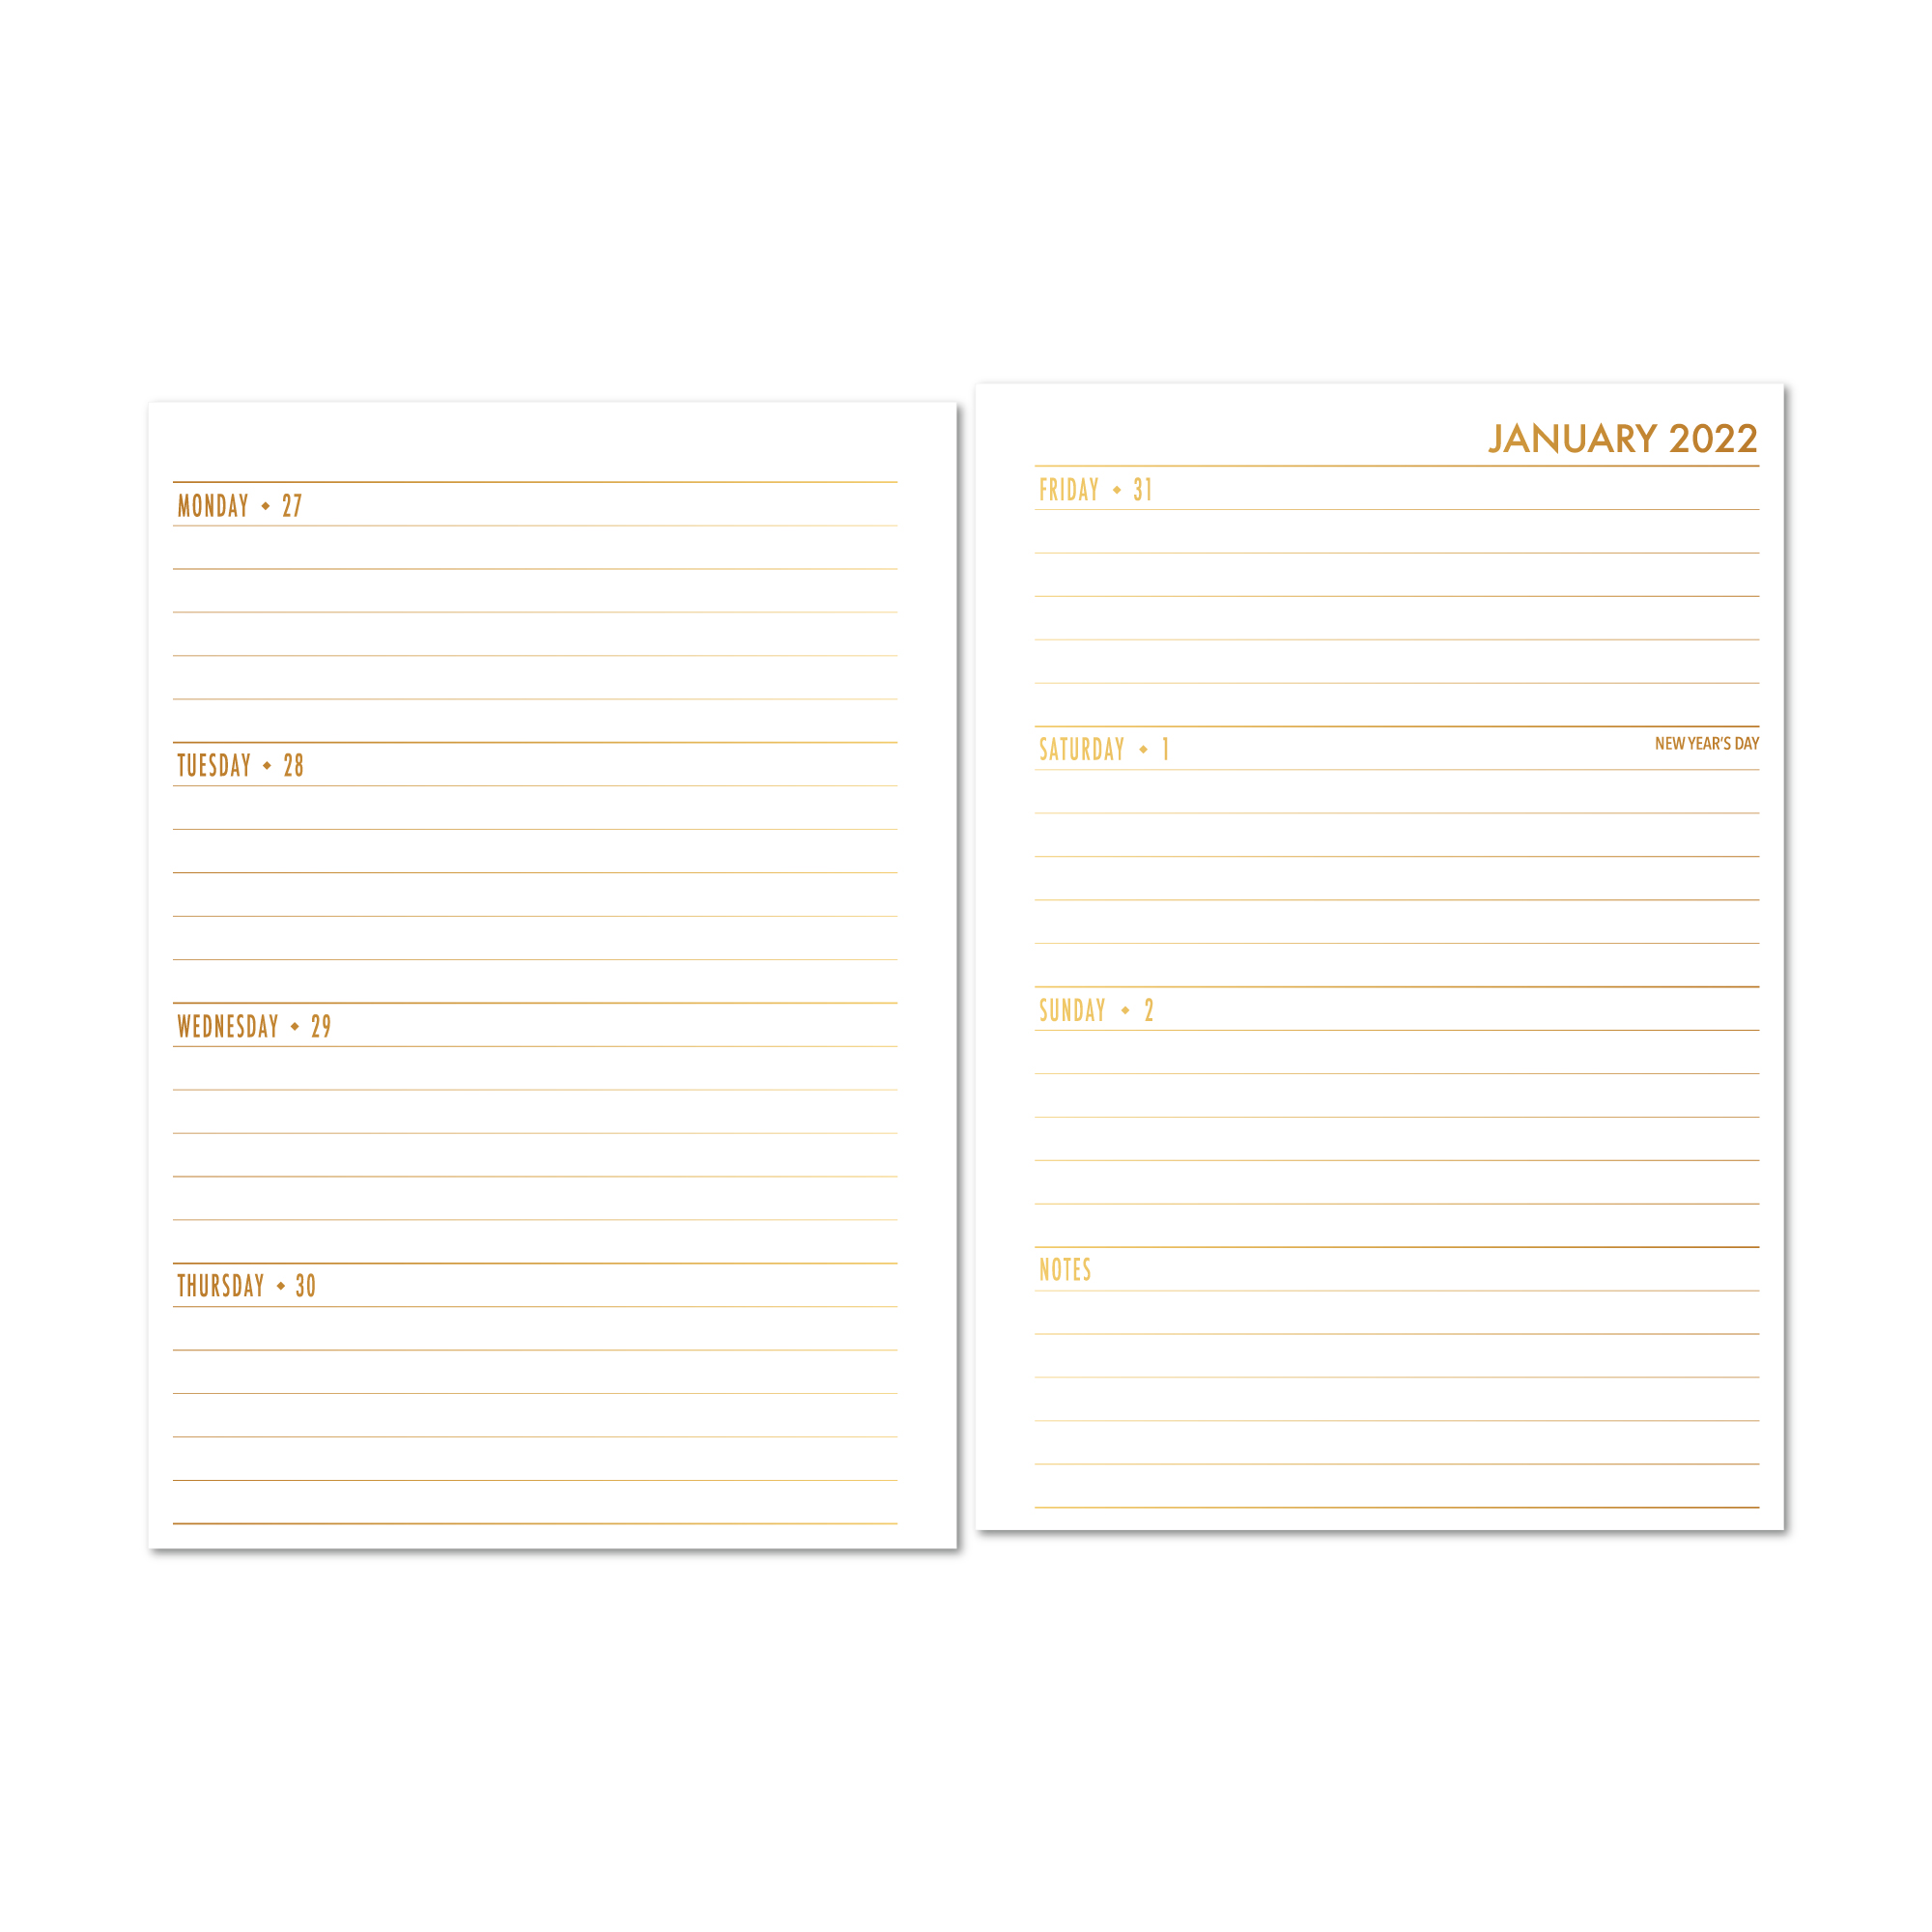 Foiled weekly horizontal planner calendar